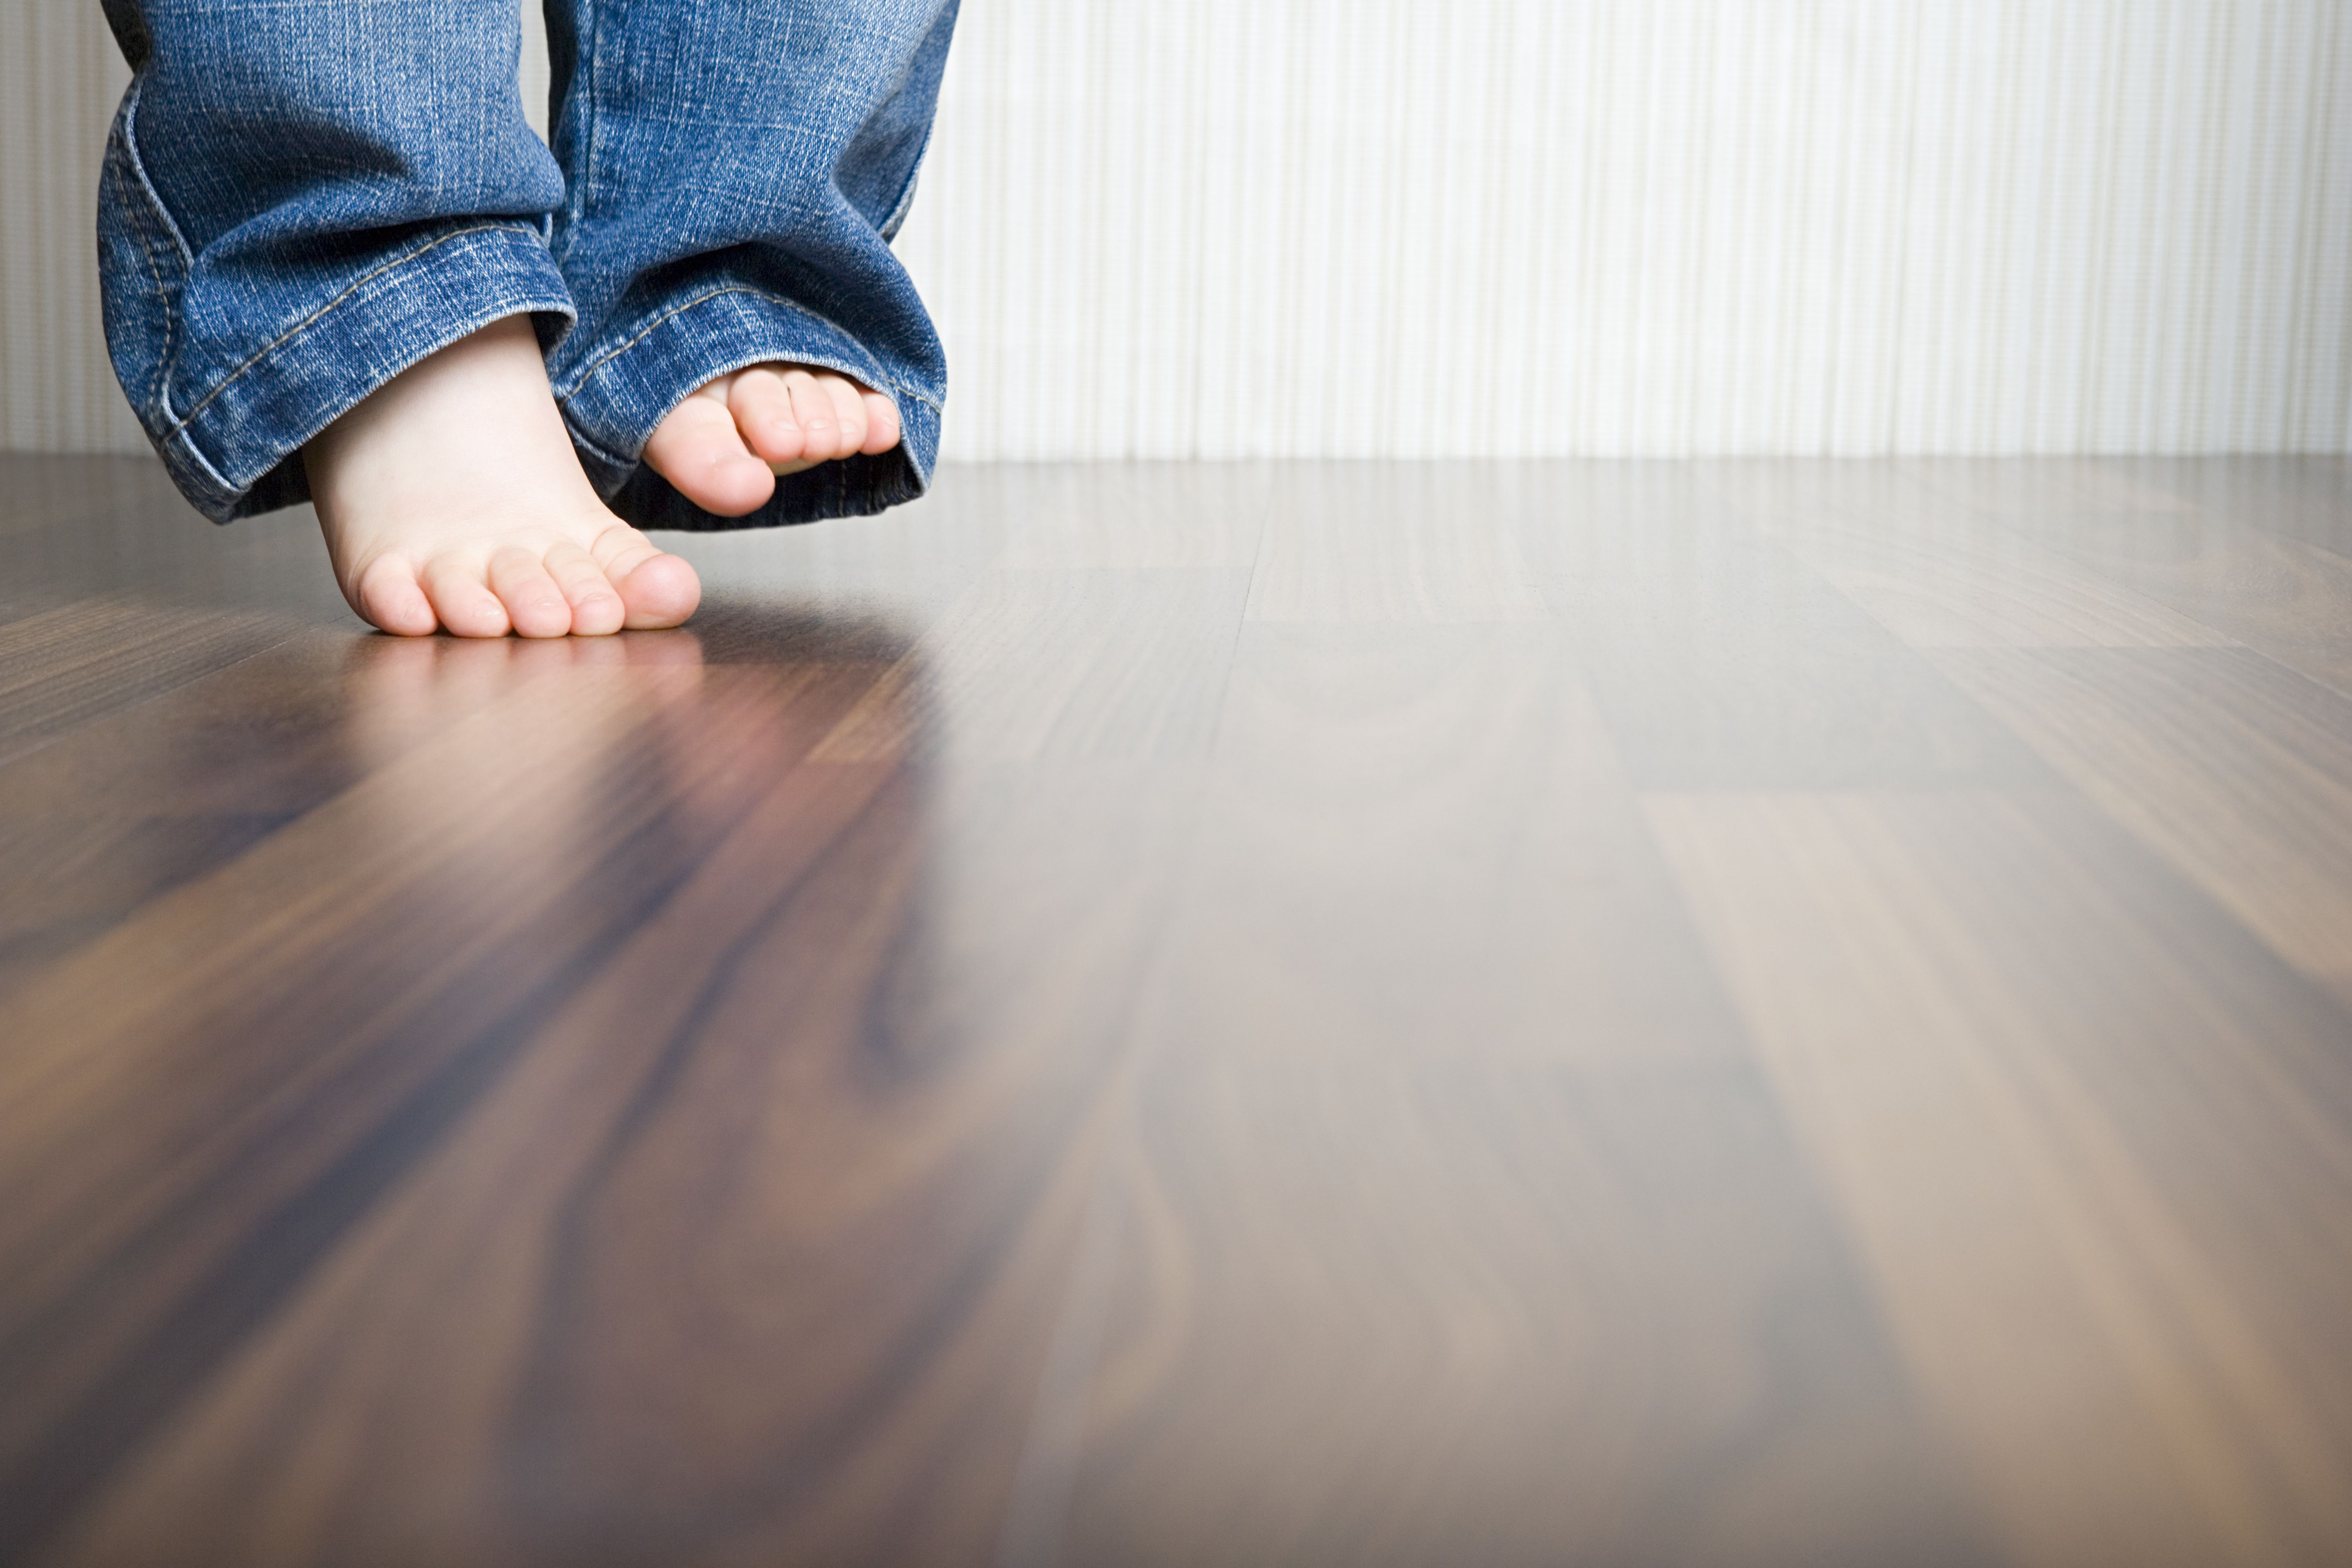 Diy Hardwood Floor Cost Of How to Clean Hardwood Floors Best Way to Clean Wood Flooring Intended for 1512149908 Gettyimages 75403973